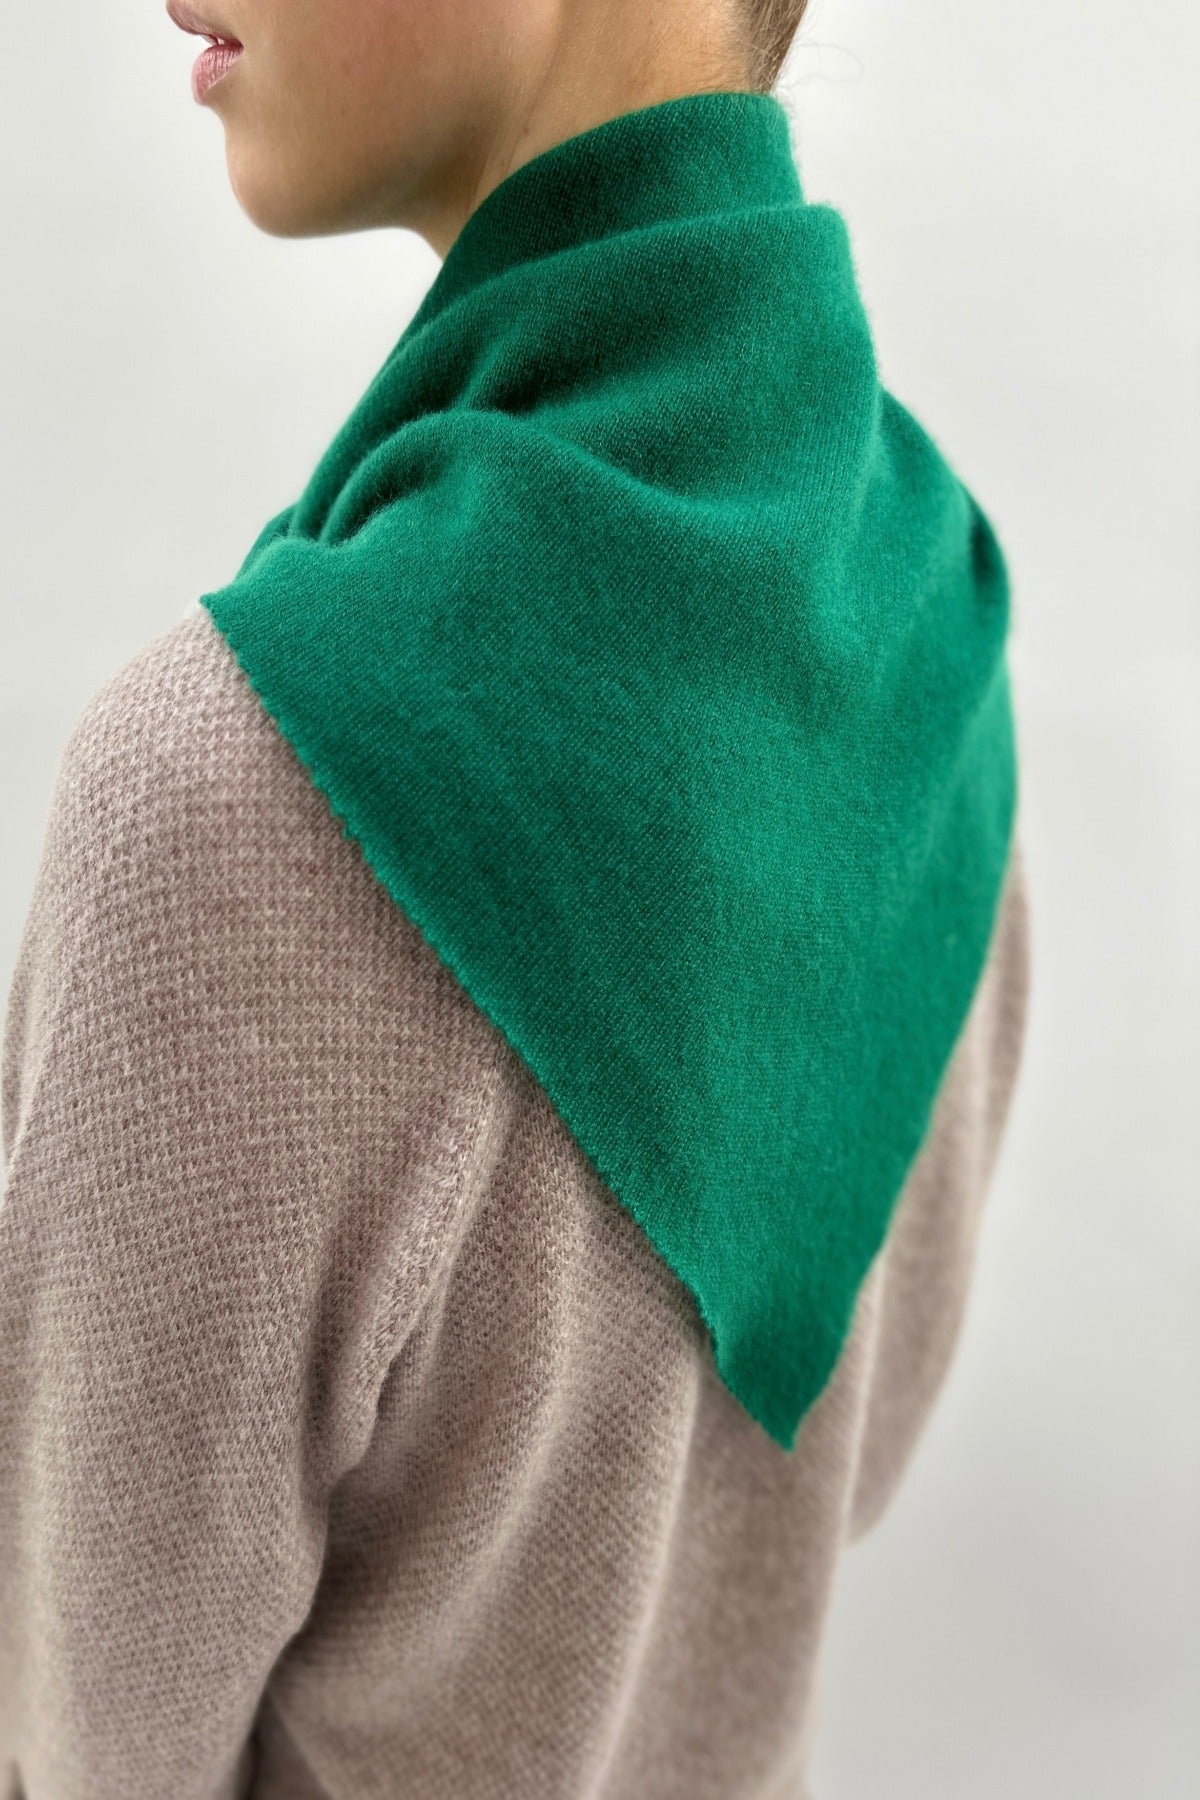 doon kelly green foulard bandan neck wamer back view